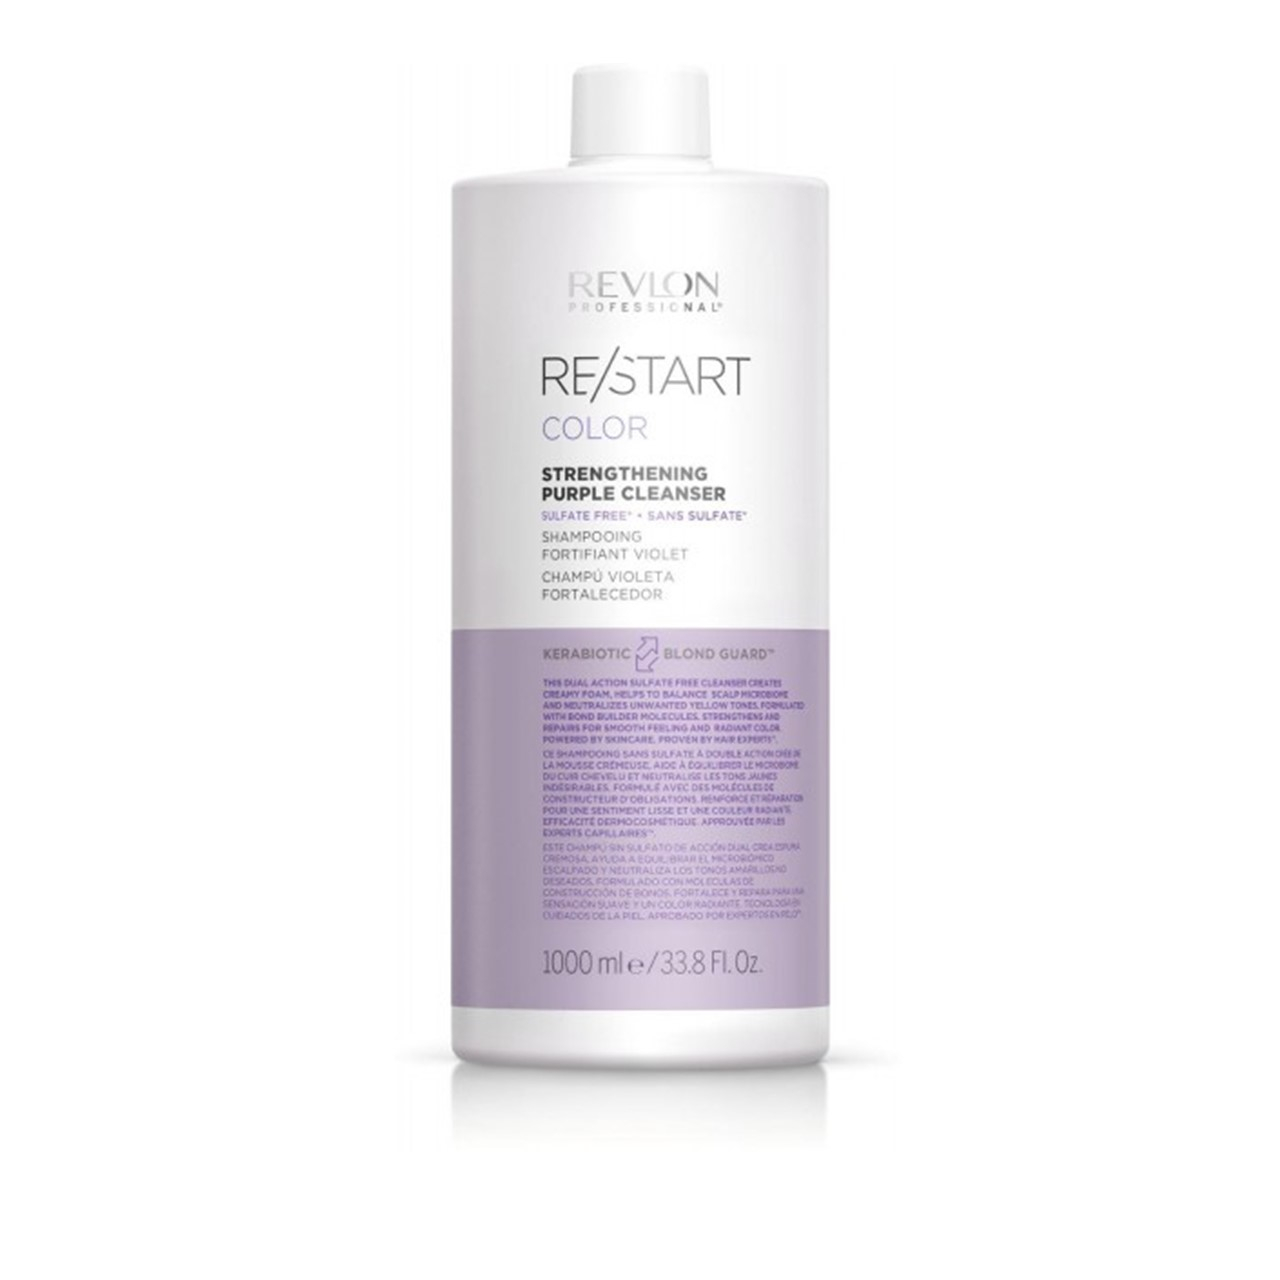 Buy Revlon Professional Re/Start Purple Cleanser Shampoo USA · Strengthening Color